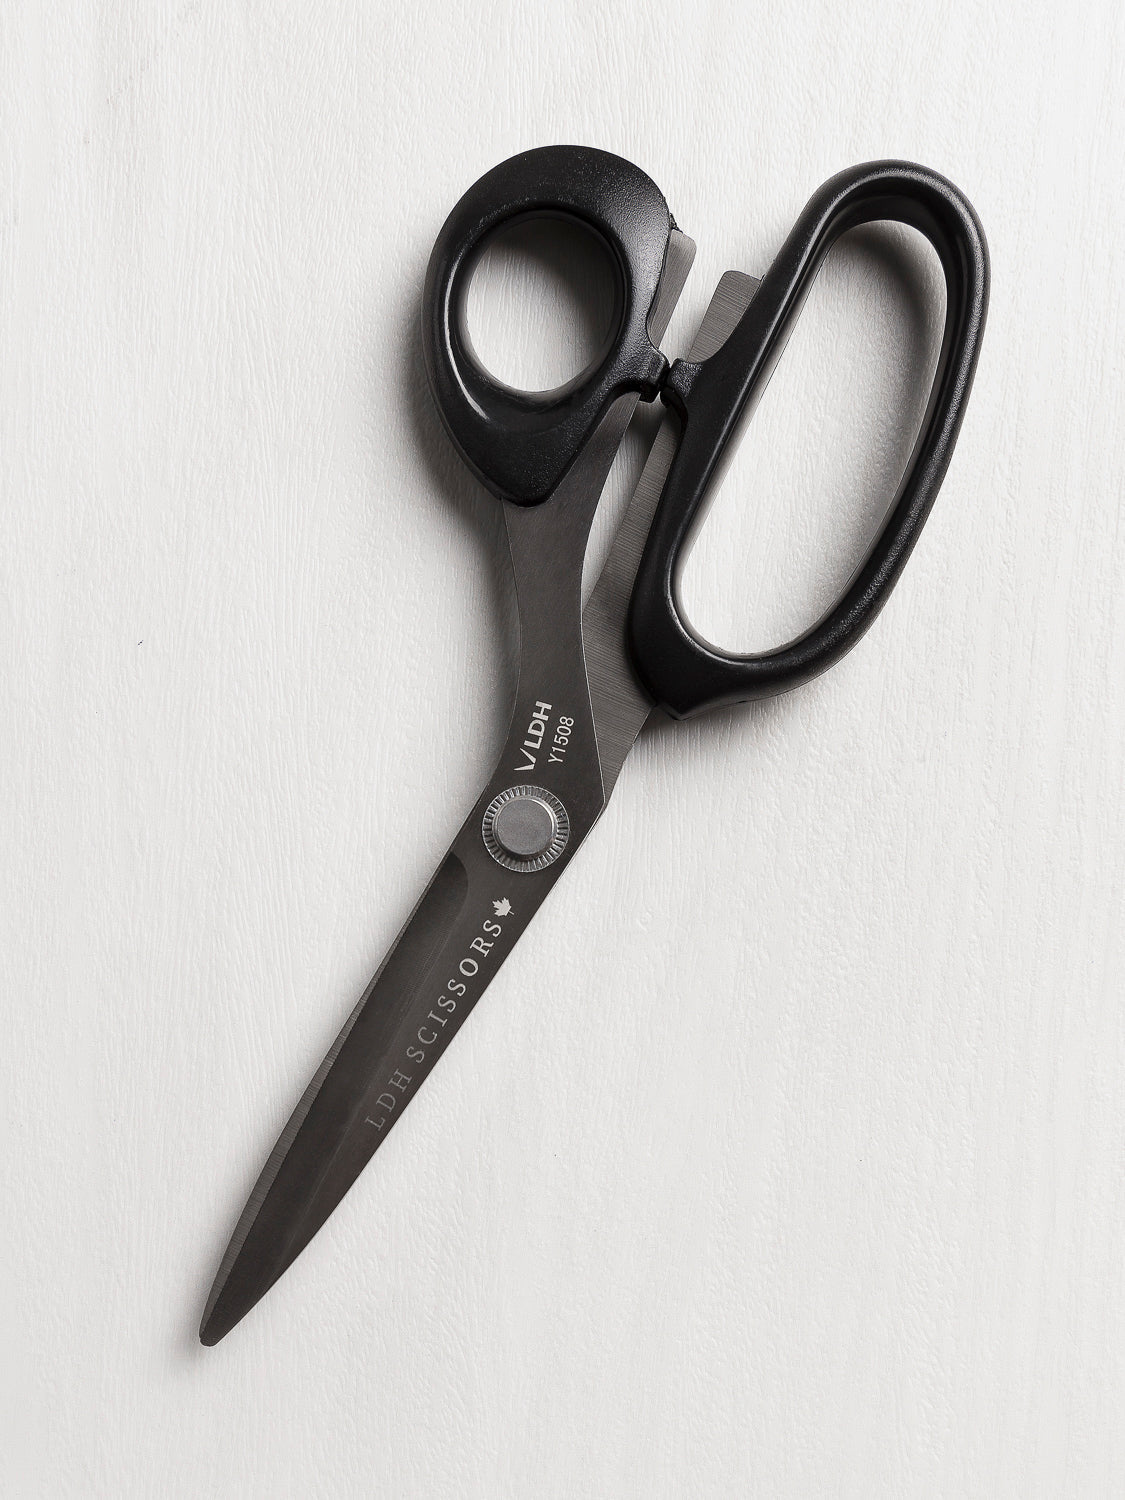 Mood Matte Black Duckbill Applique Scissors with Matte Rubber